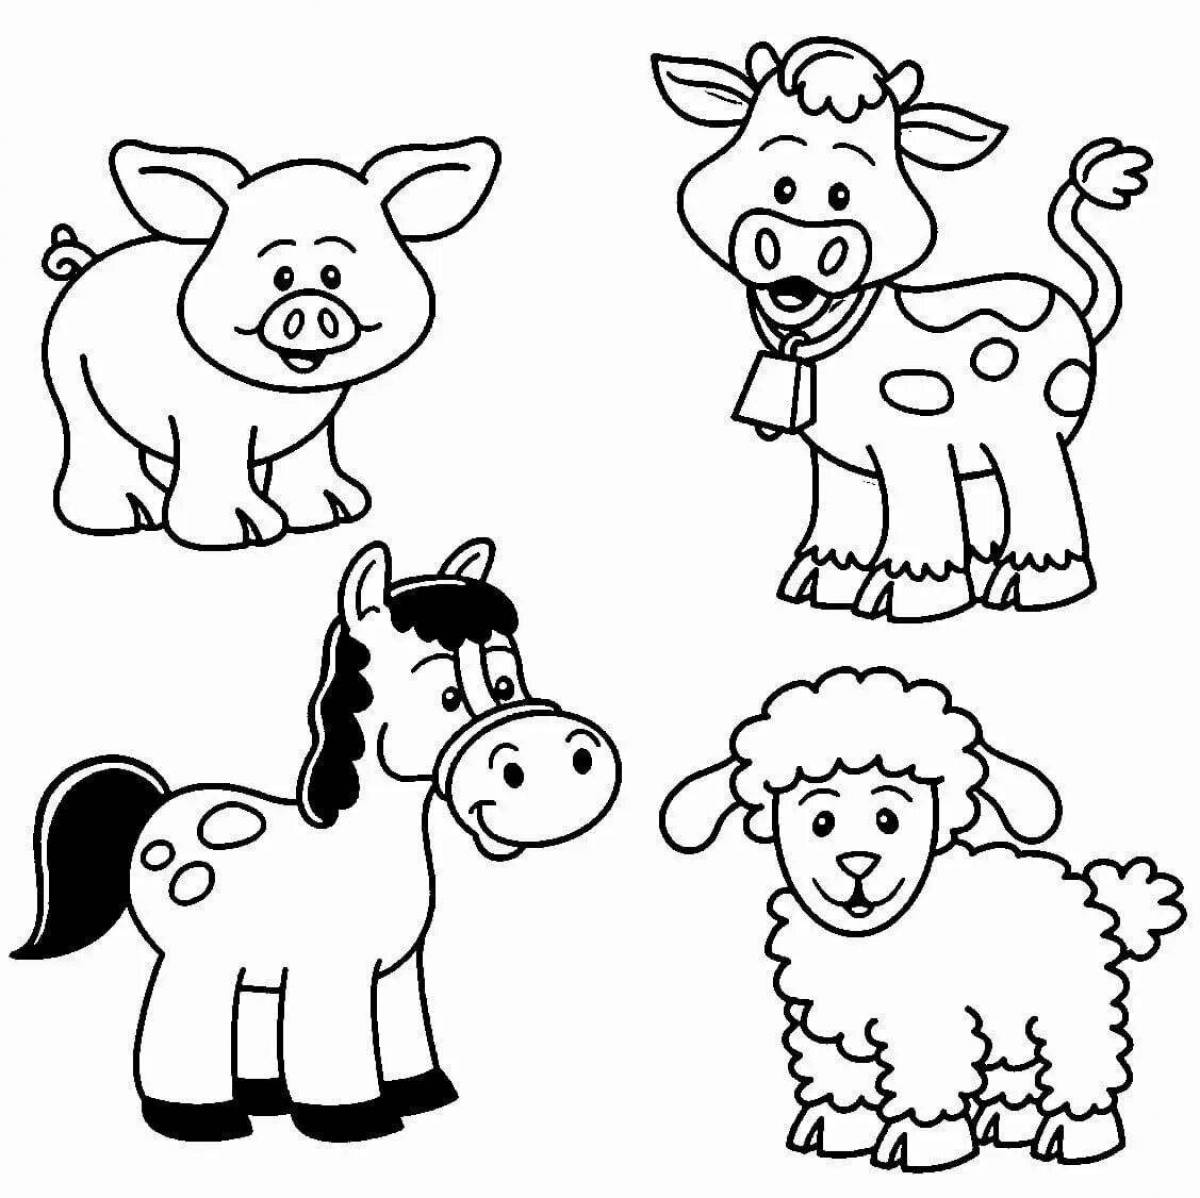 Fun animal coloring games